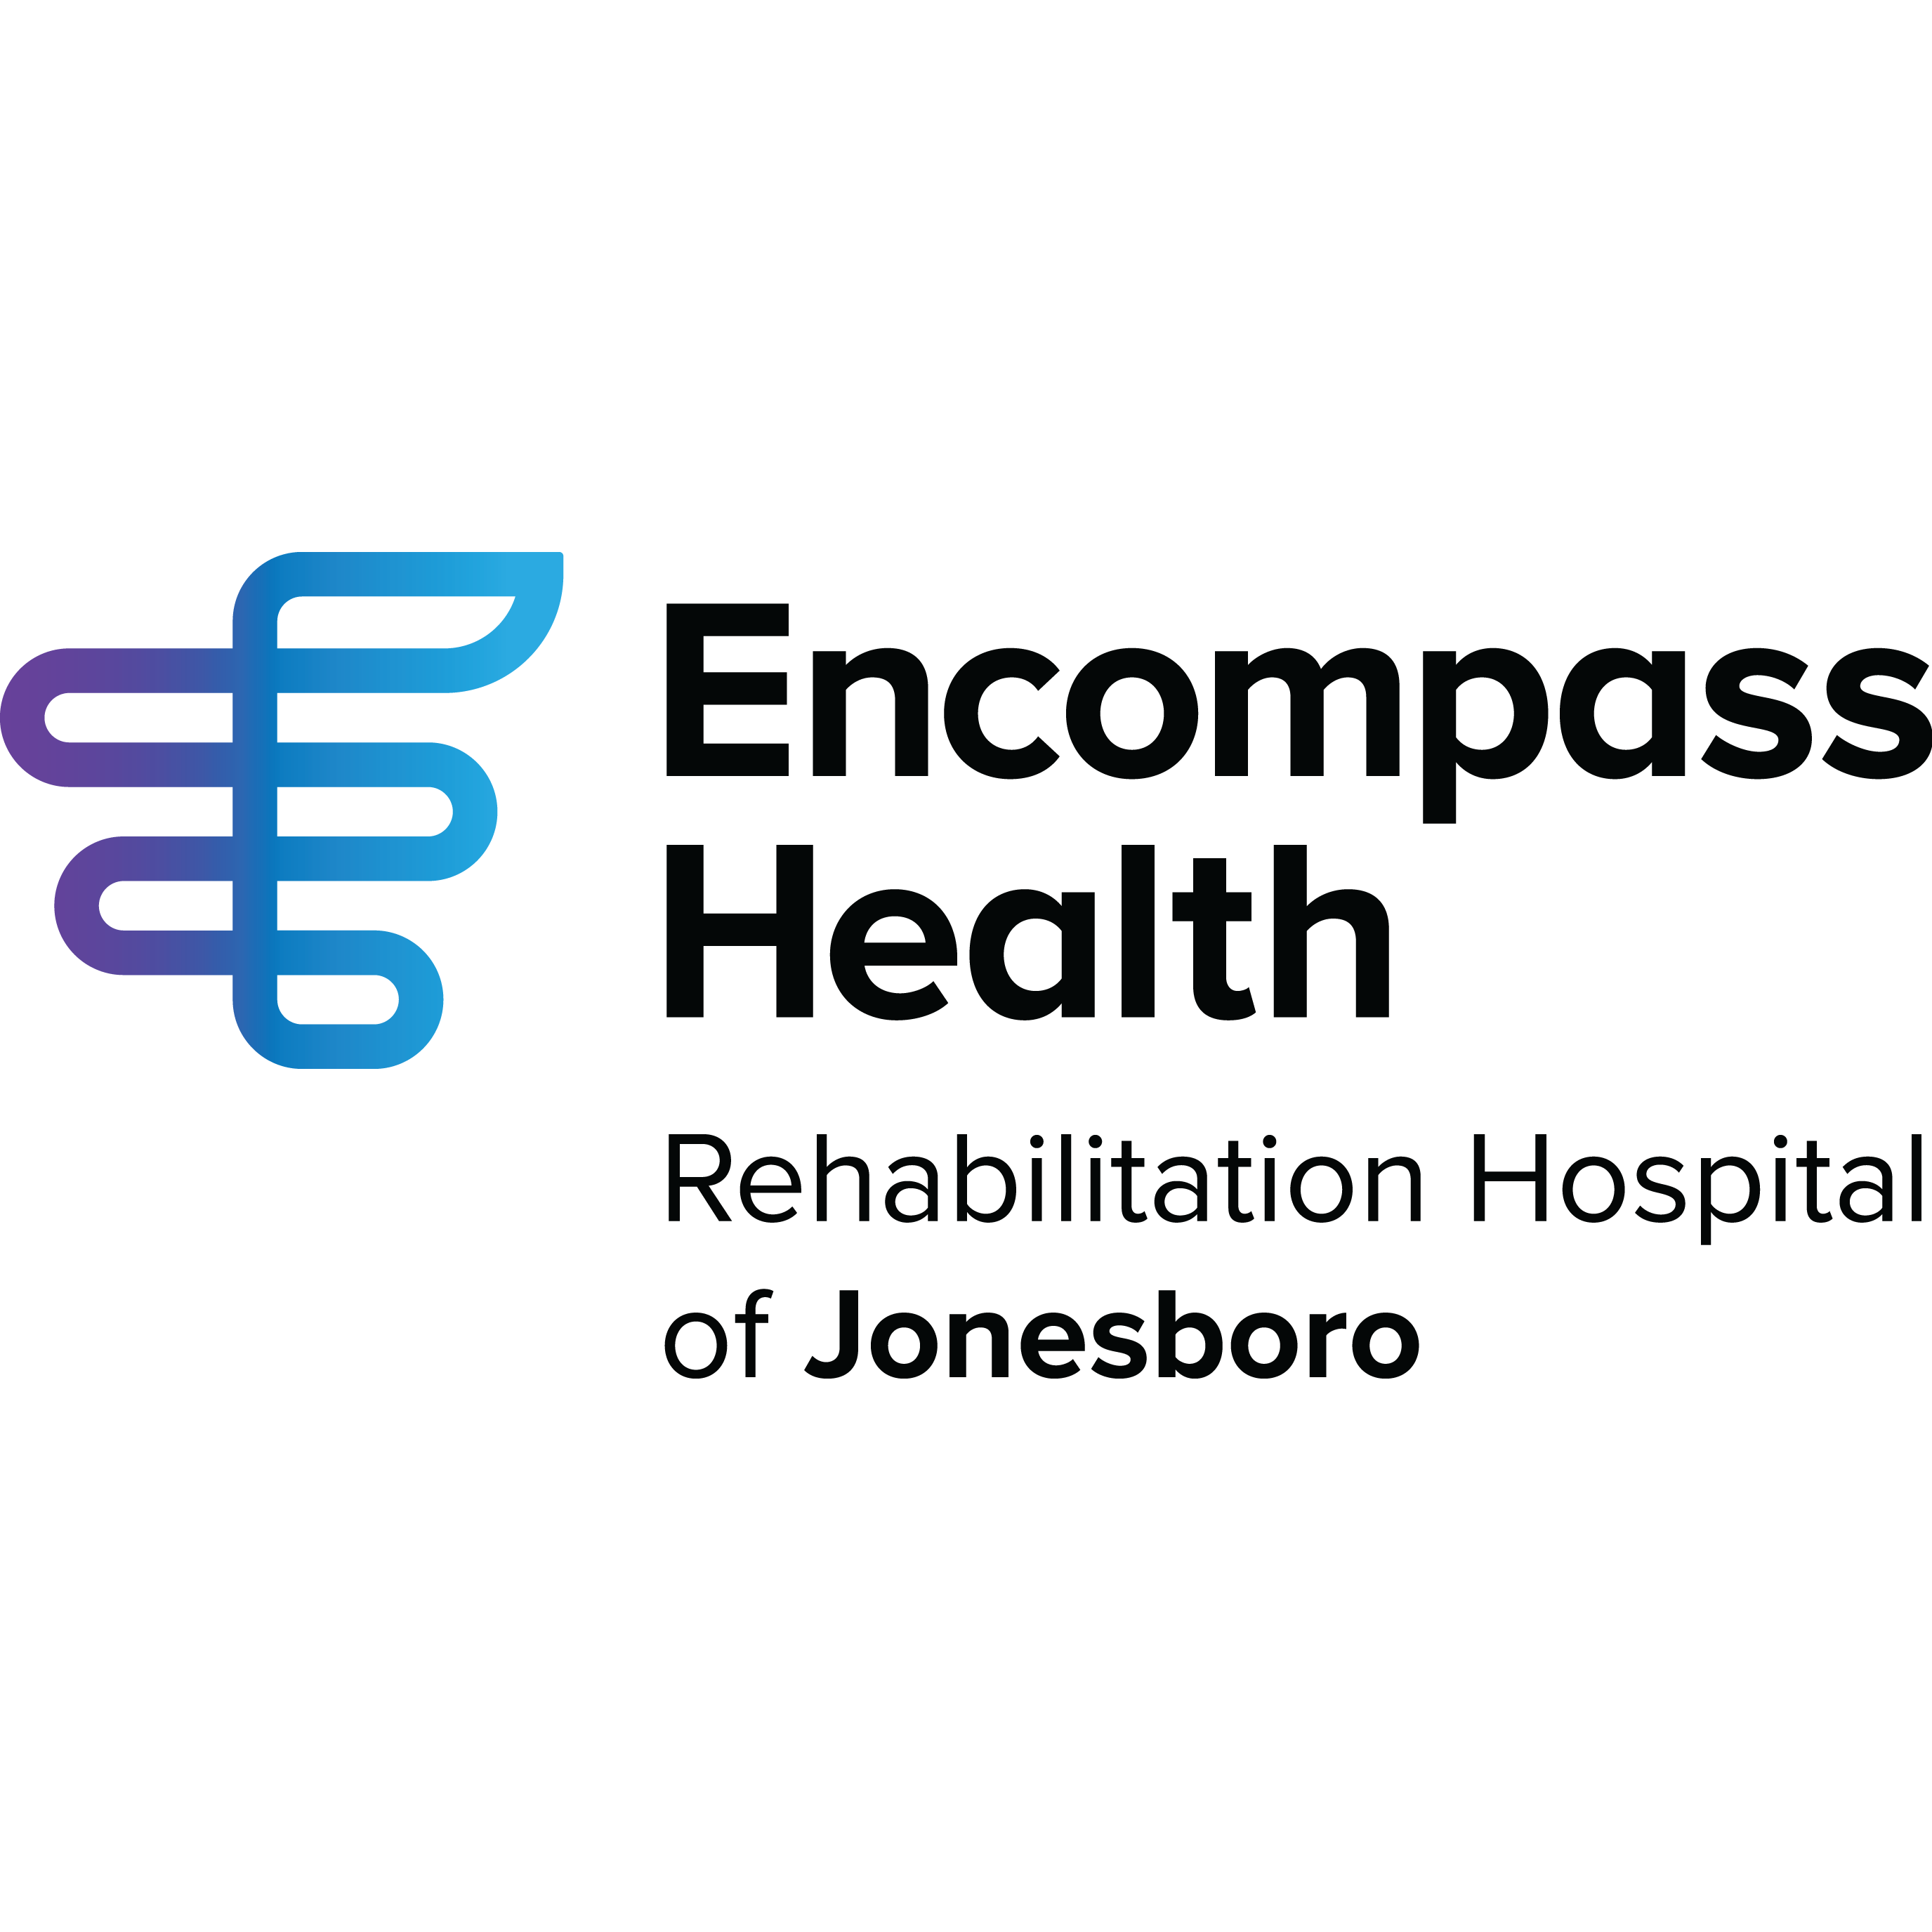 Encompass Health Rehabilitation Hospital of Jonesboro - Jonesboro, AR 72401 - (870)932-0440 | ShowMeLocal.com